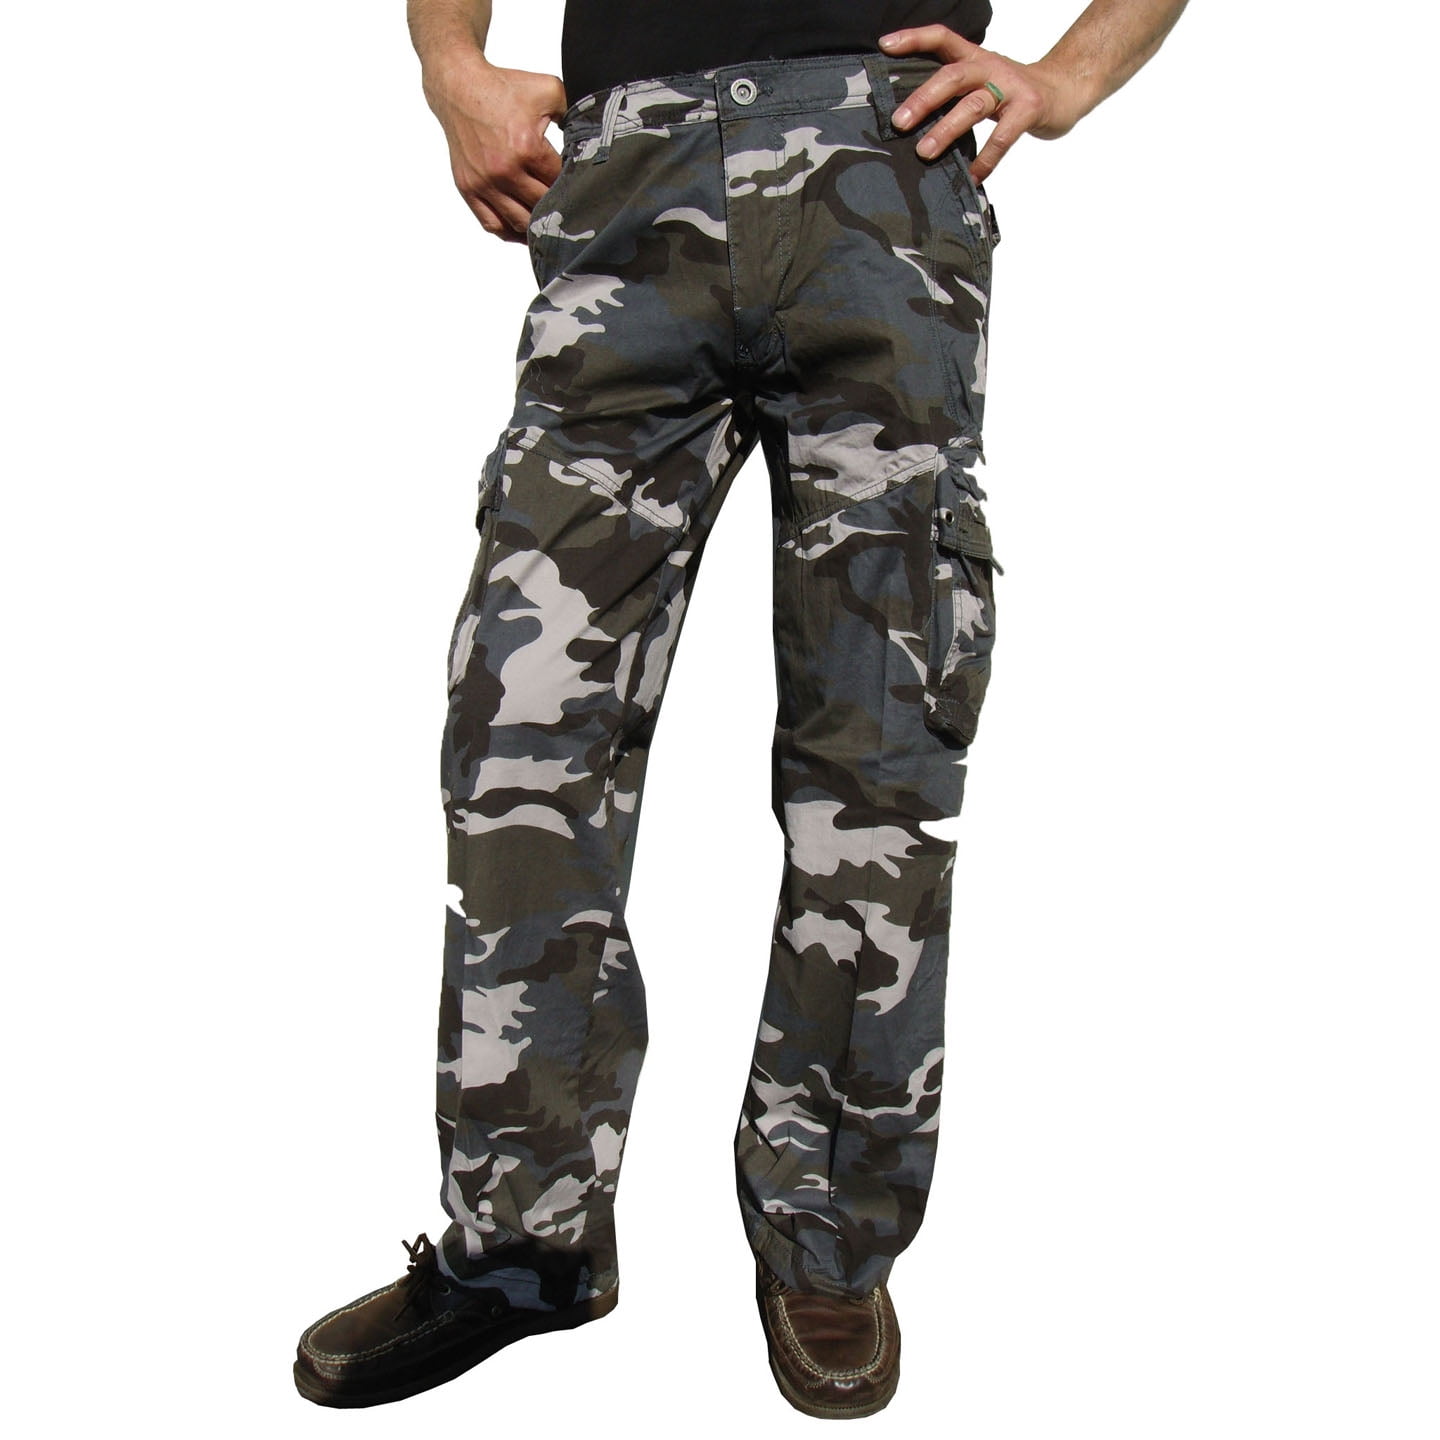 Mens Military-Style Camoflage Cargo Pants #27C3 38x34_RGY - Walmart.com